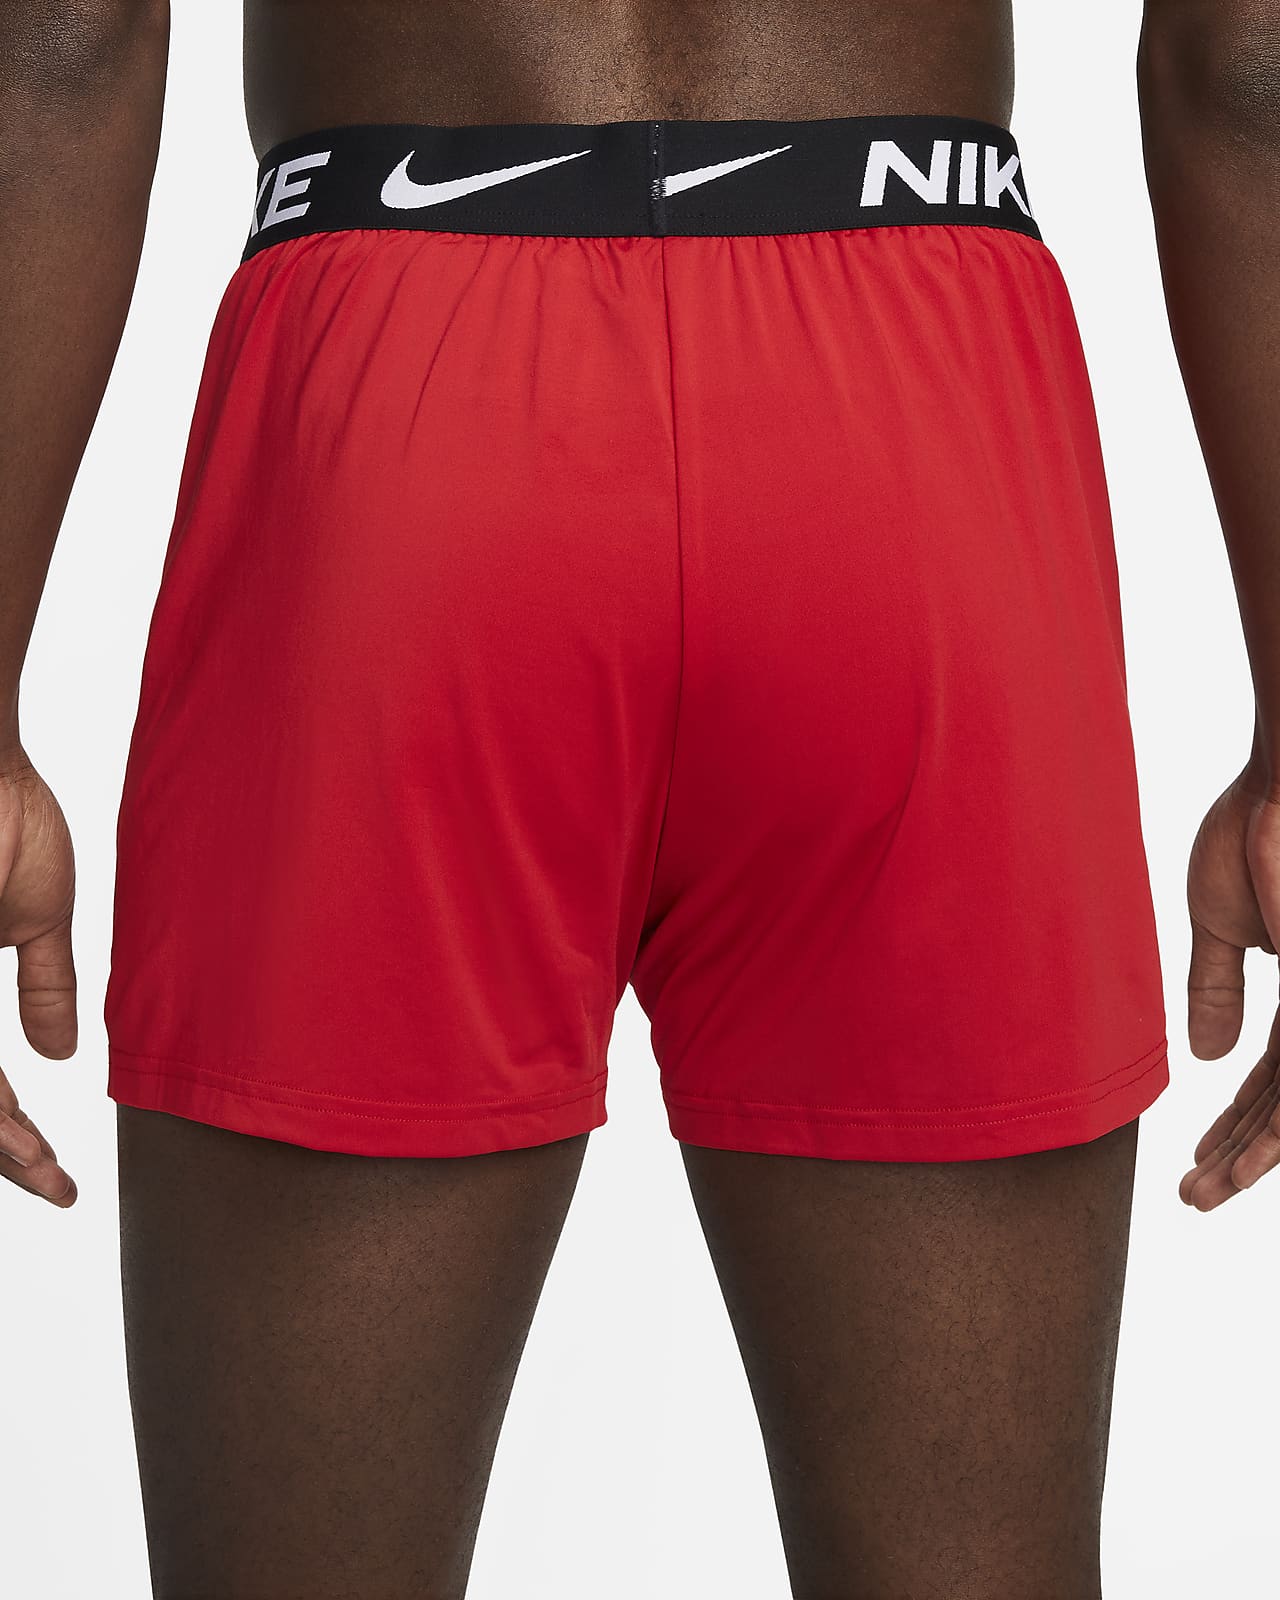 Boxer shorts Nike Boxer Brief Dri-Fit Essential Micro 3-Pack Black